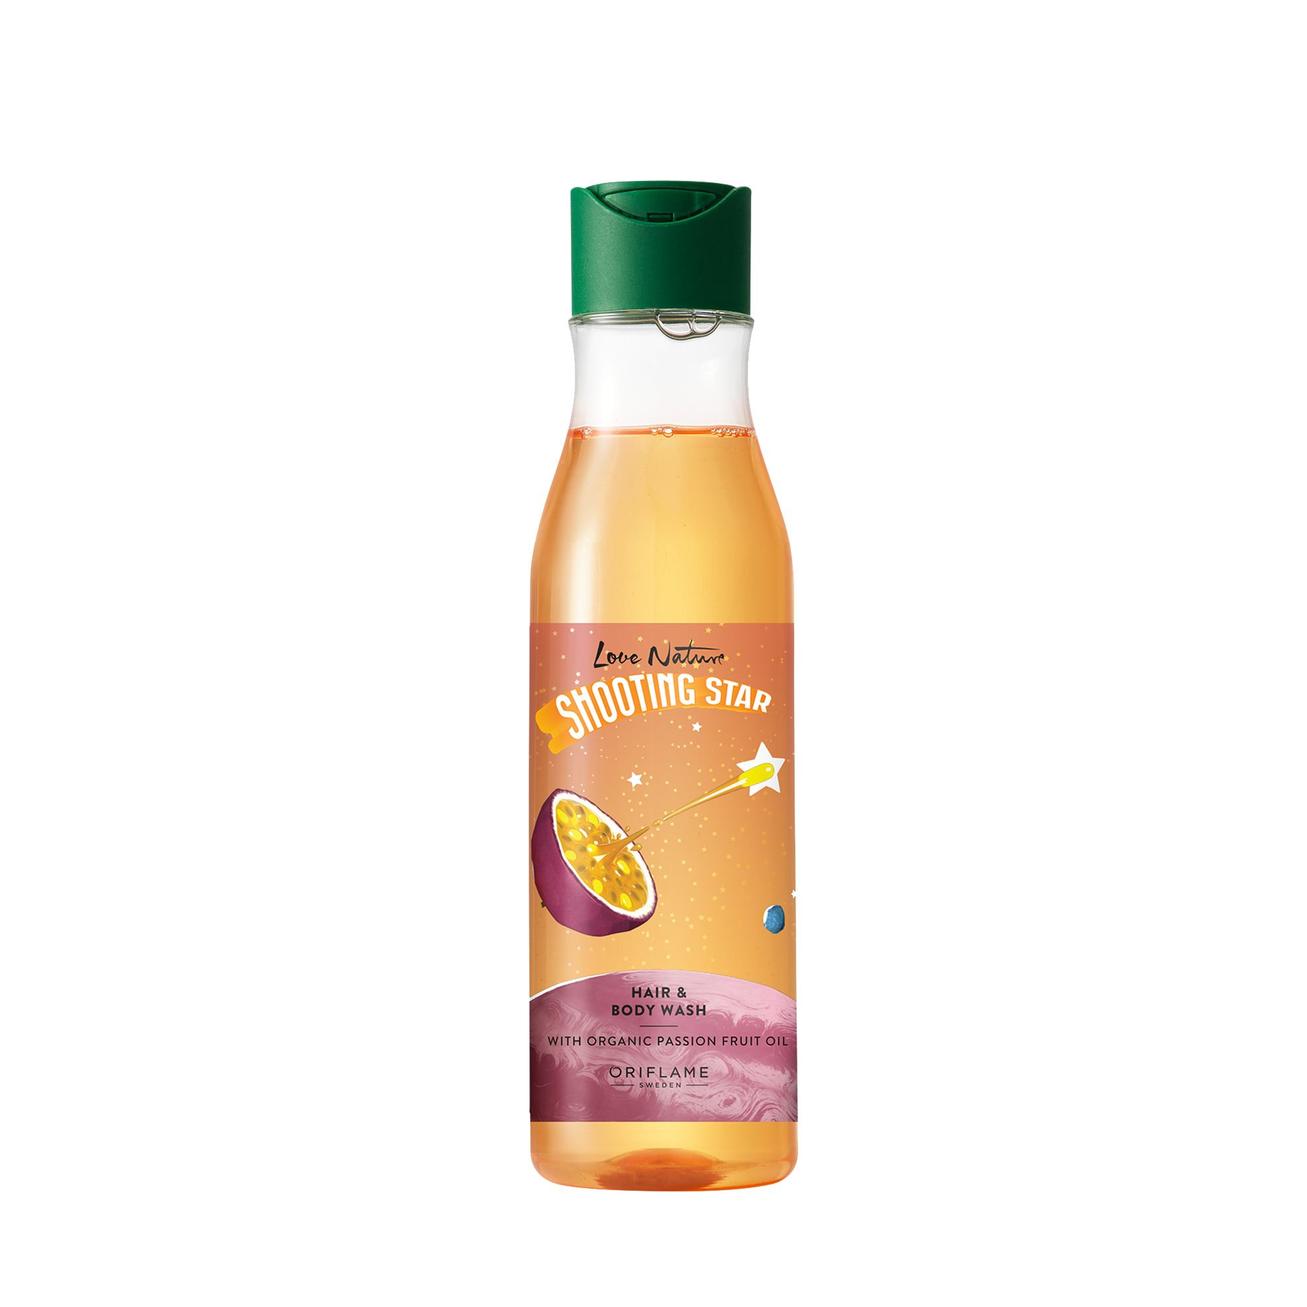 Tilbud: Shooting Star Hair & Body Wash with Organic Passion Fruit Oil kr 125 på Oriflame